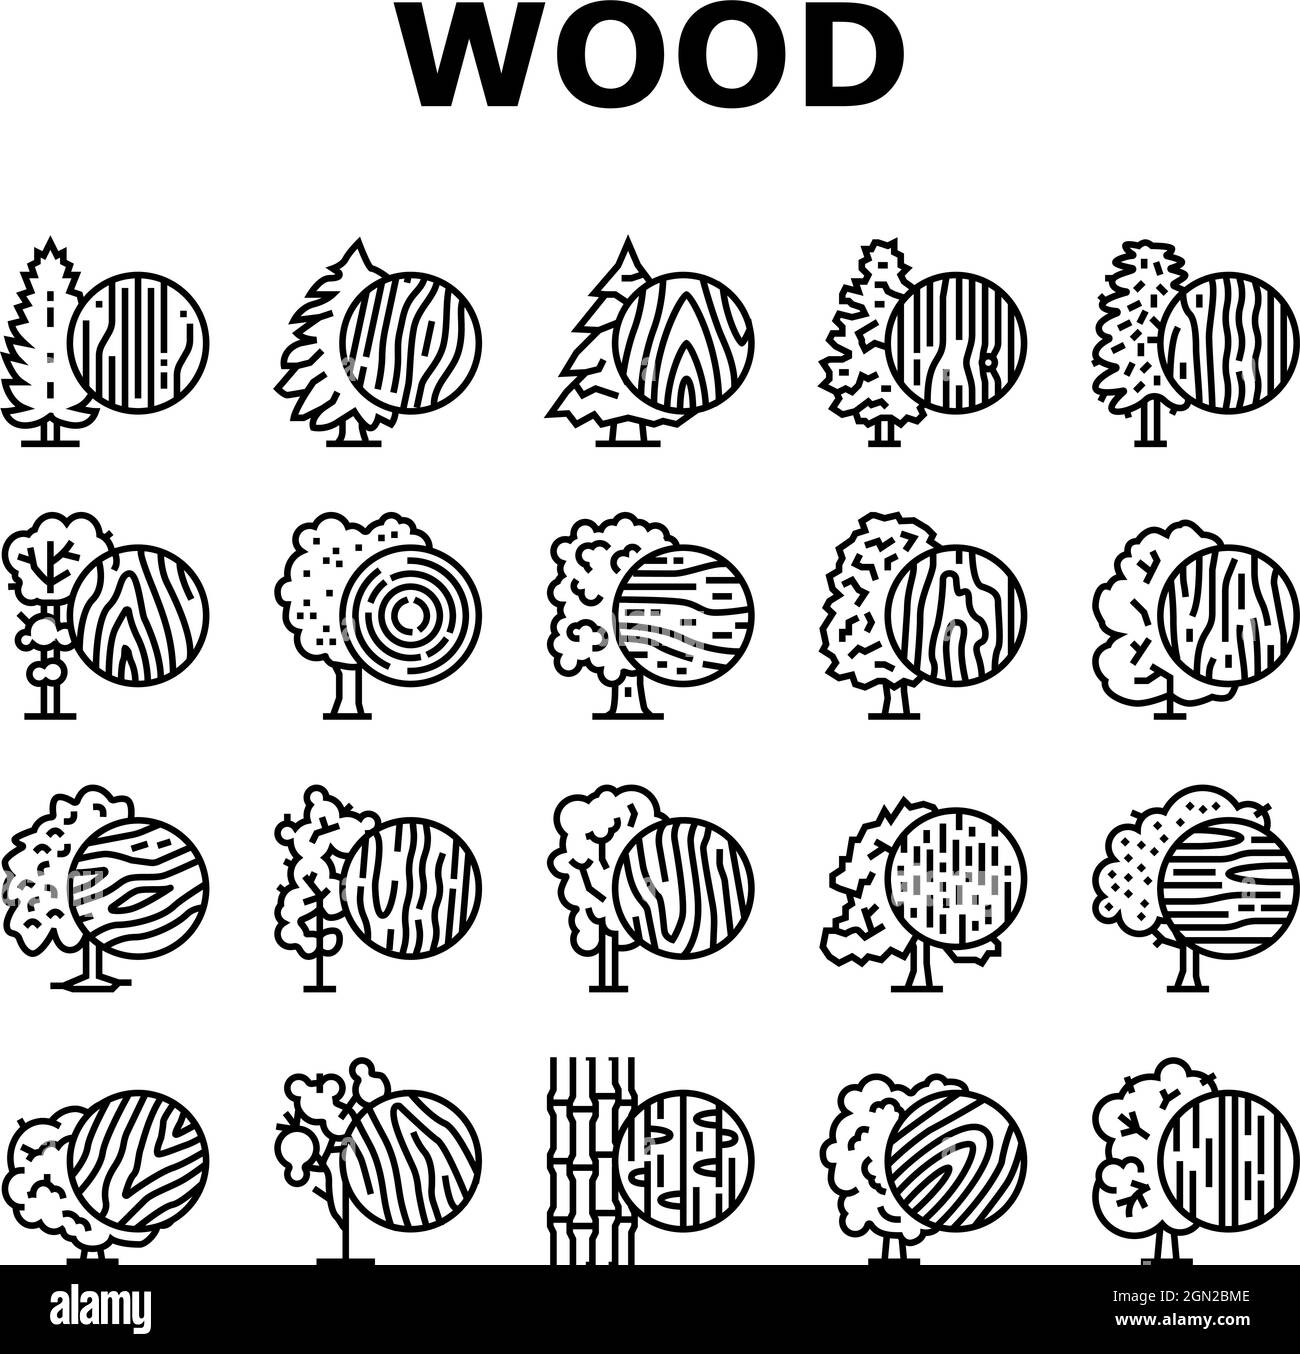 Wood Land Growth Natural Tree Icons Set Vector Stock Vector